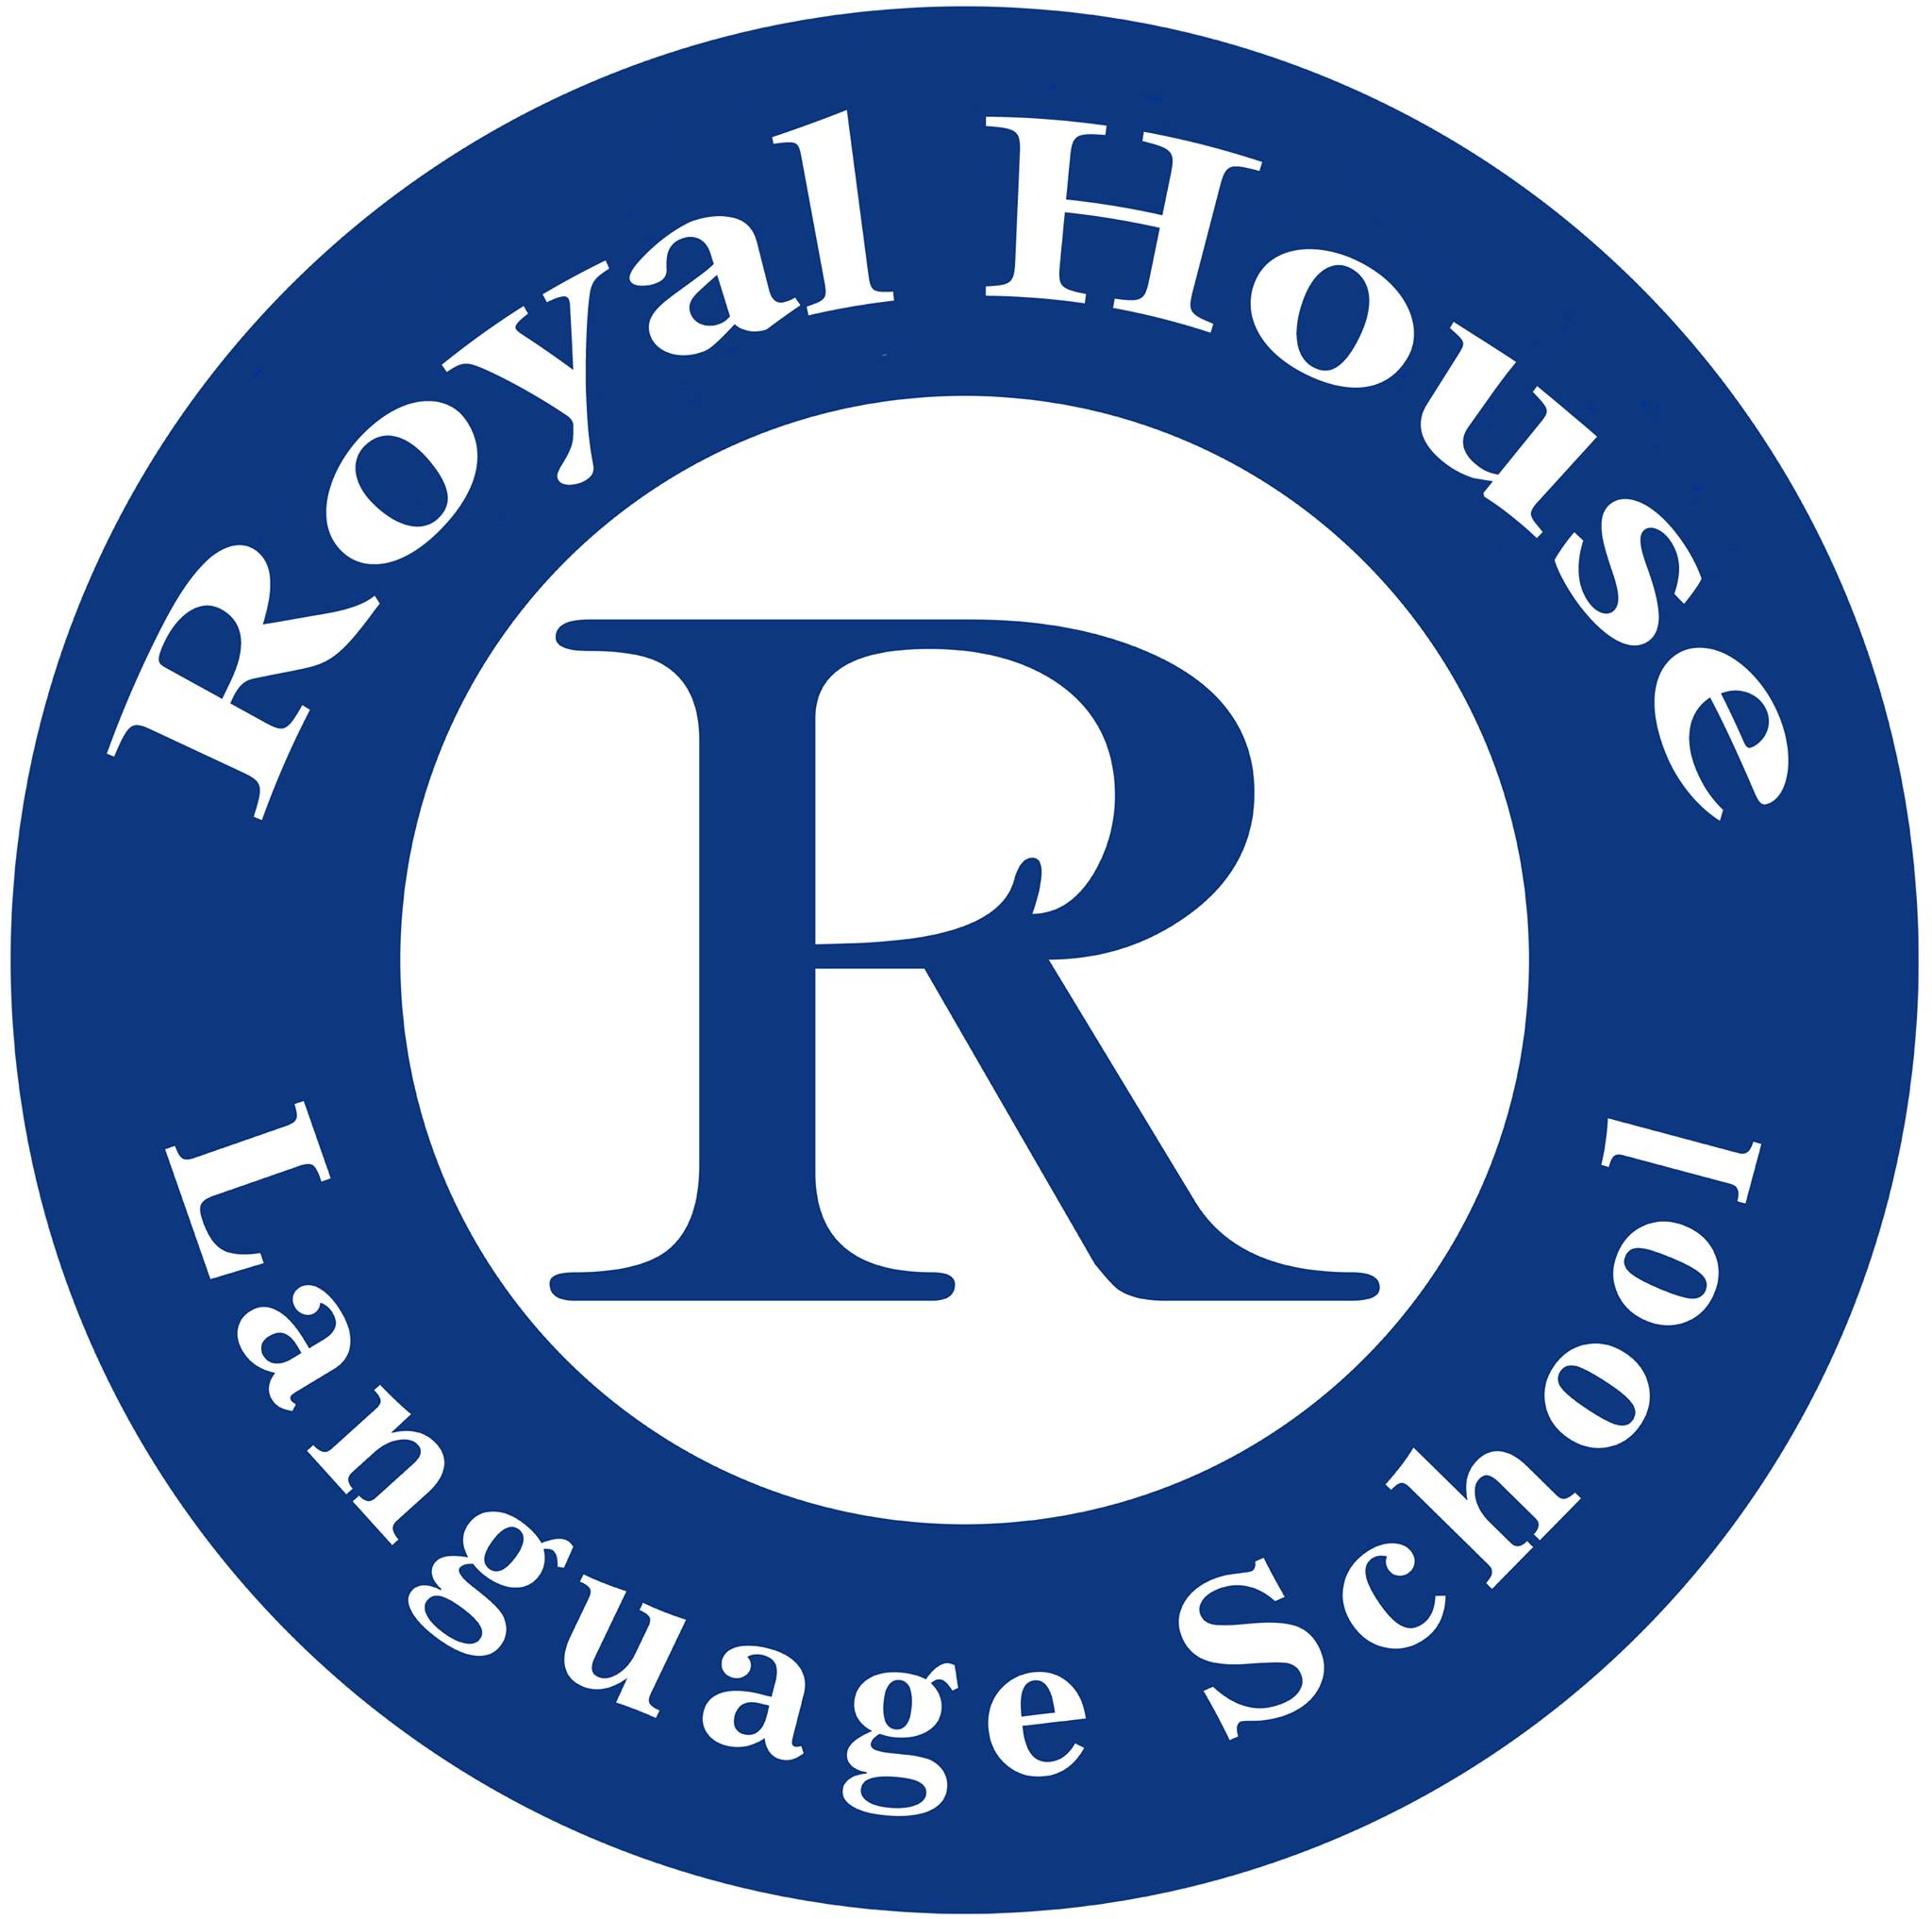 Royal House Language School (R.H.L.S)